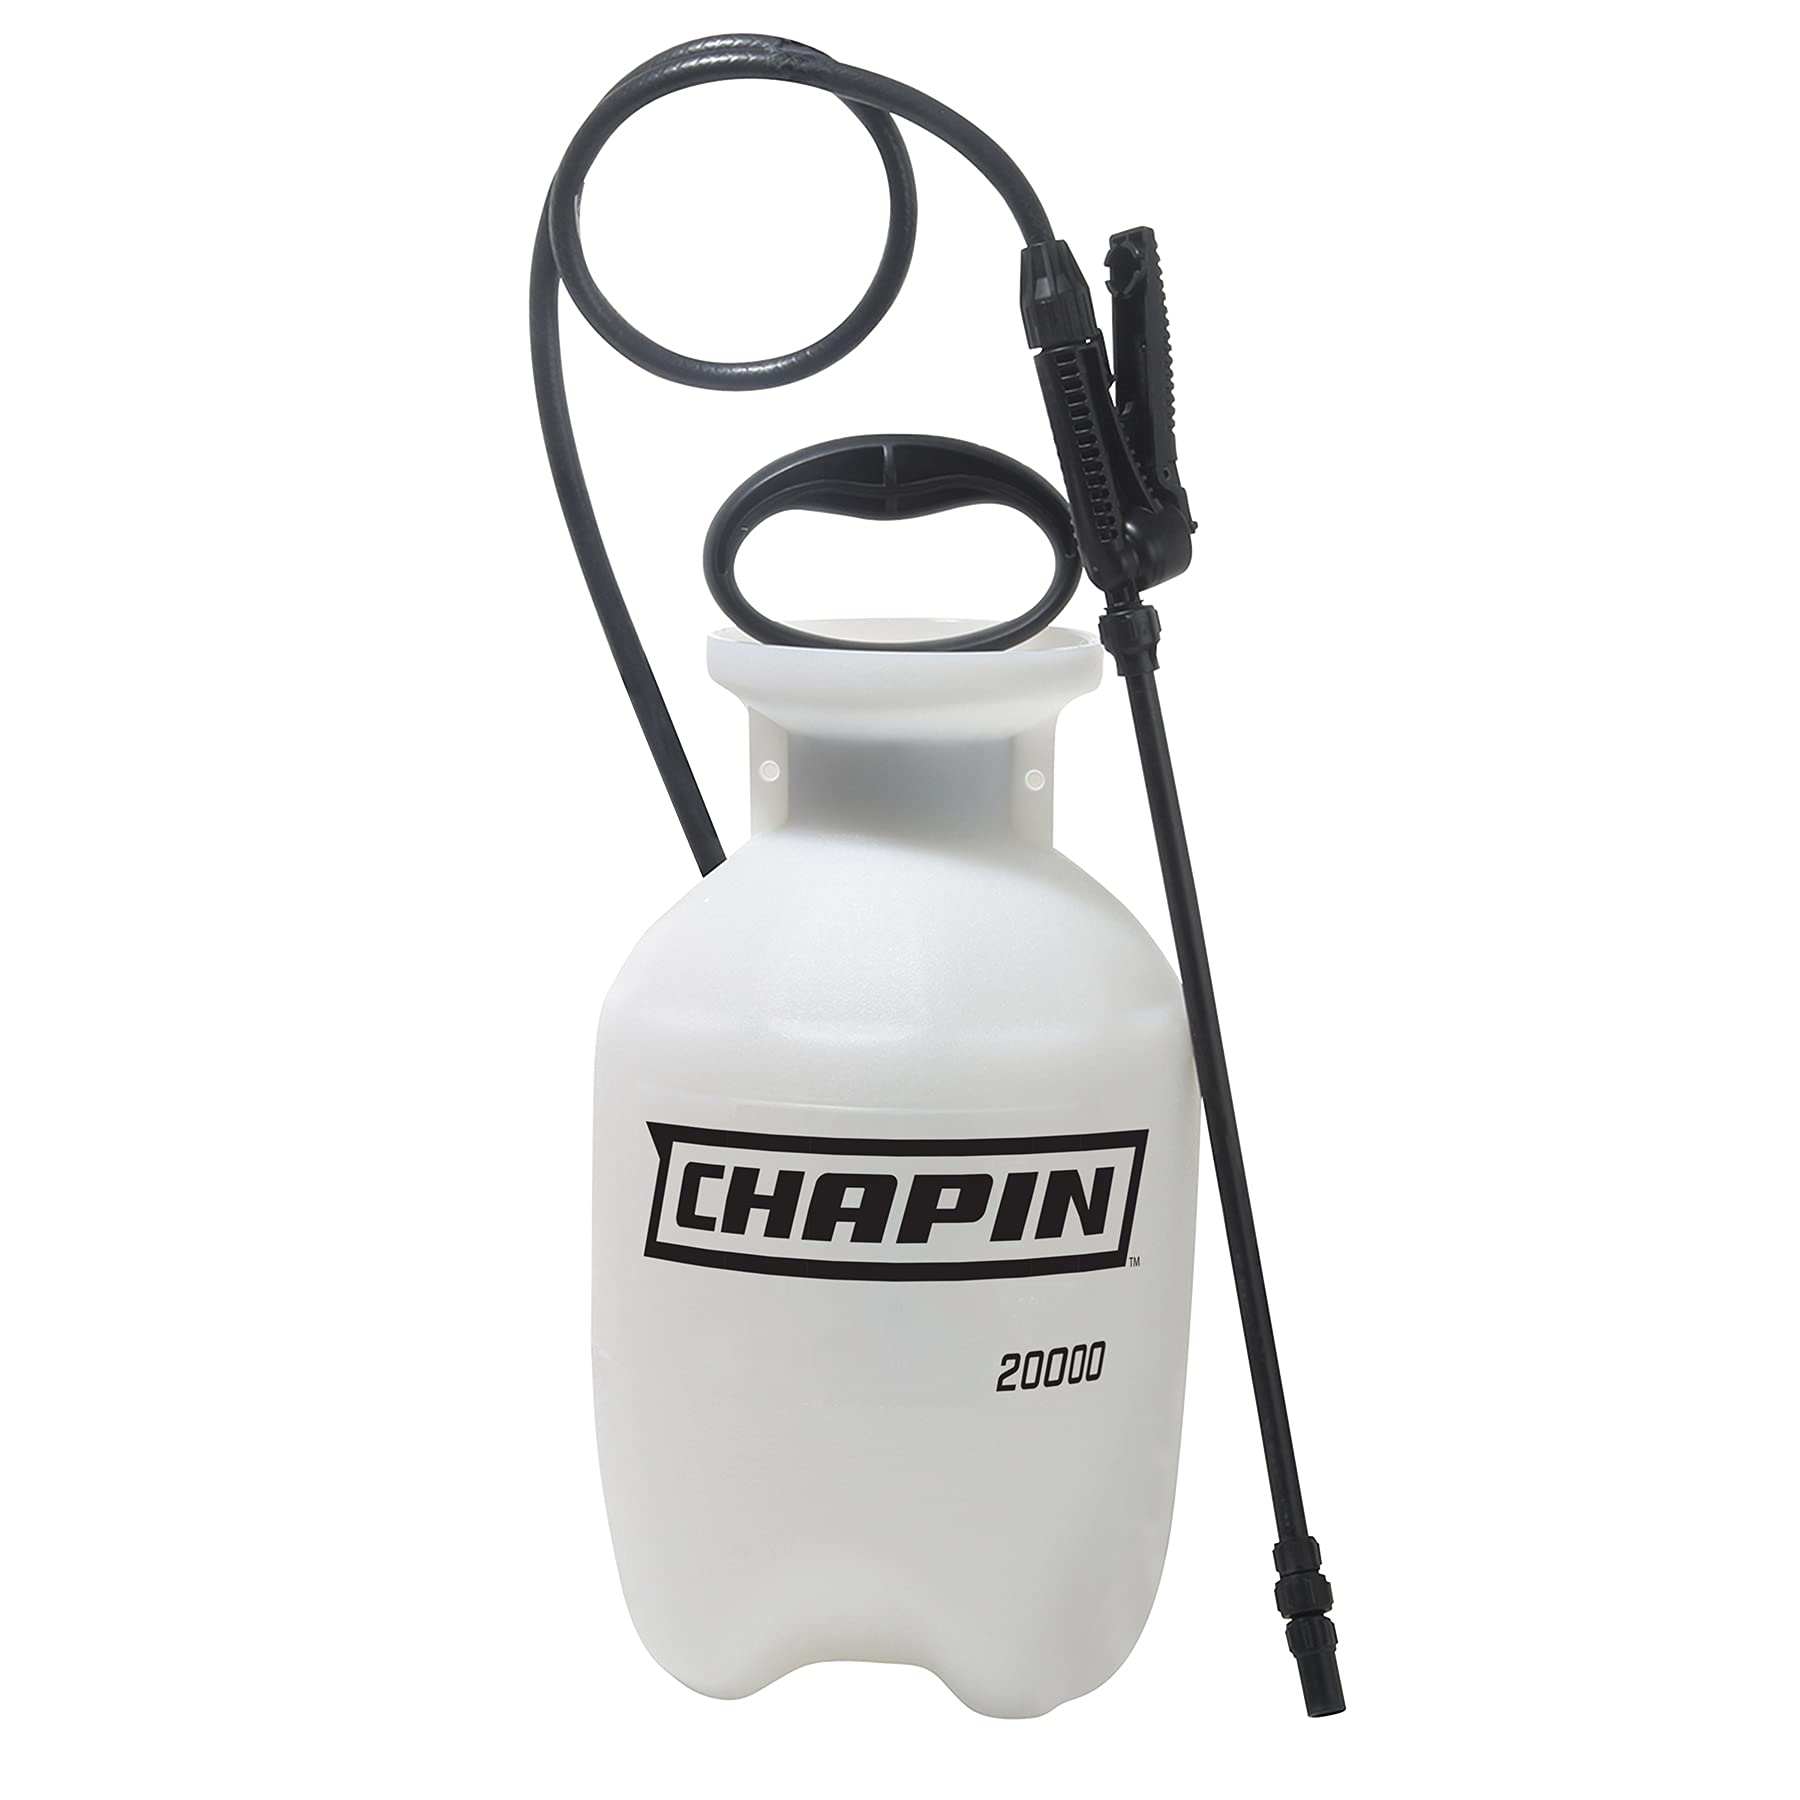 Chapin 20000 Made in USA 1-Gallon Lawn and Garden Pump Pressured Sprayer